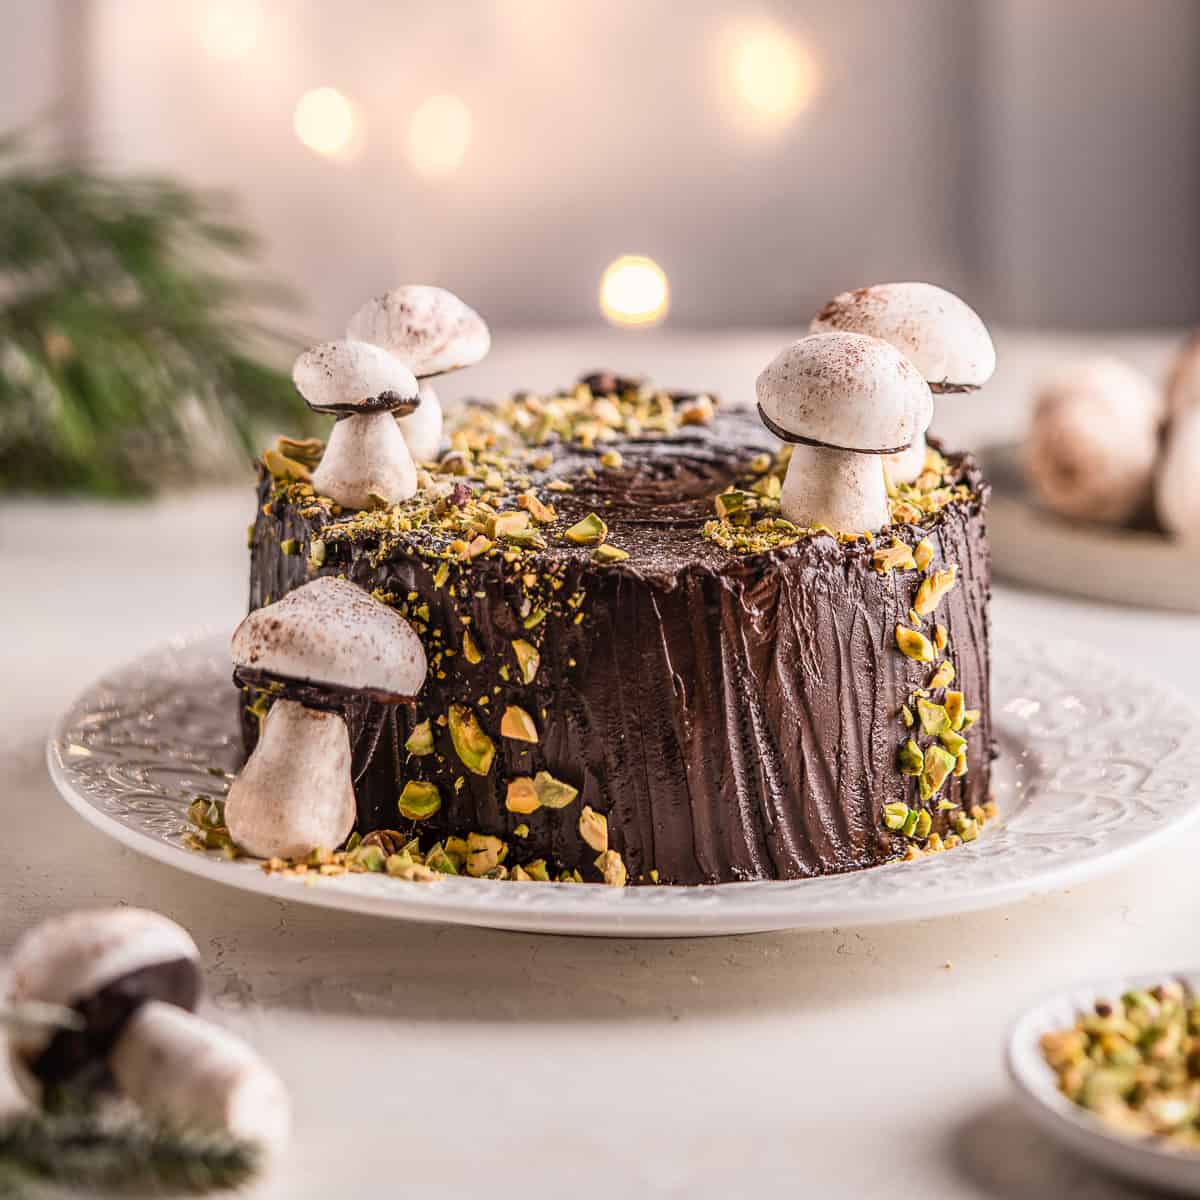 Woodland tree stump cake with meringue mushrooms on a serving plate.